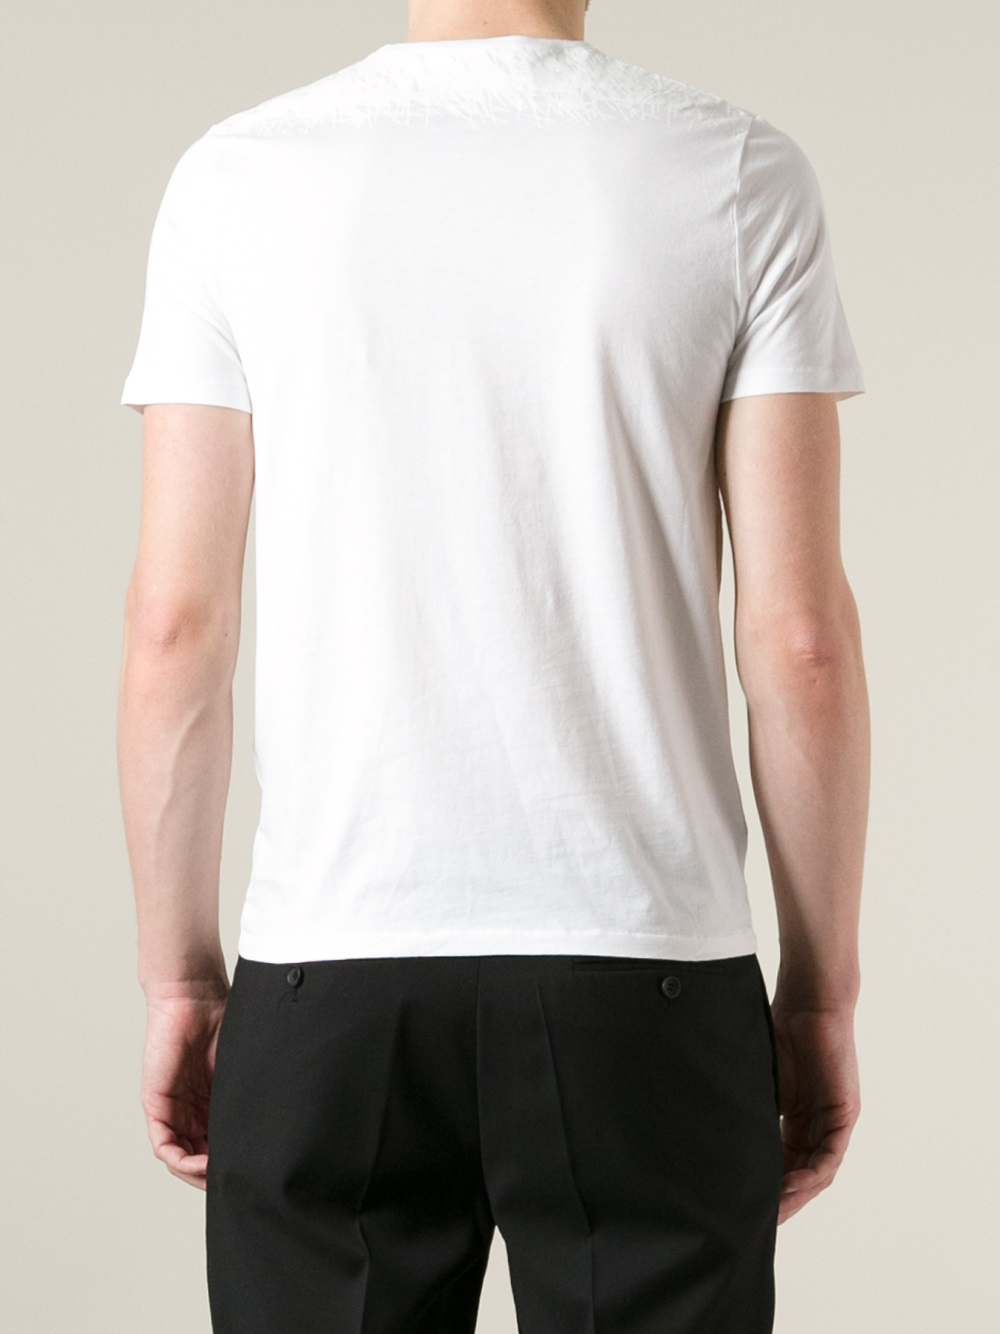 Lyst - Balenciaga Classic Tshirt in White for Men